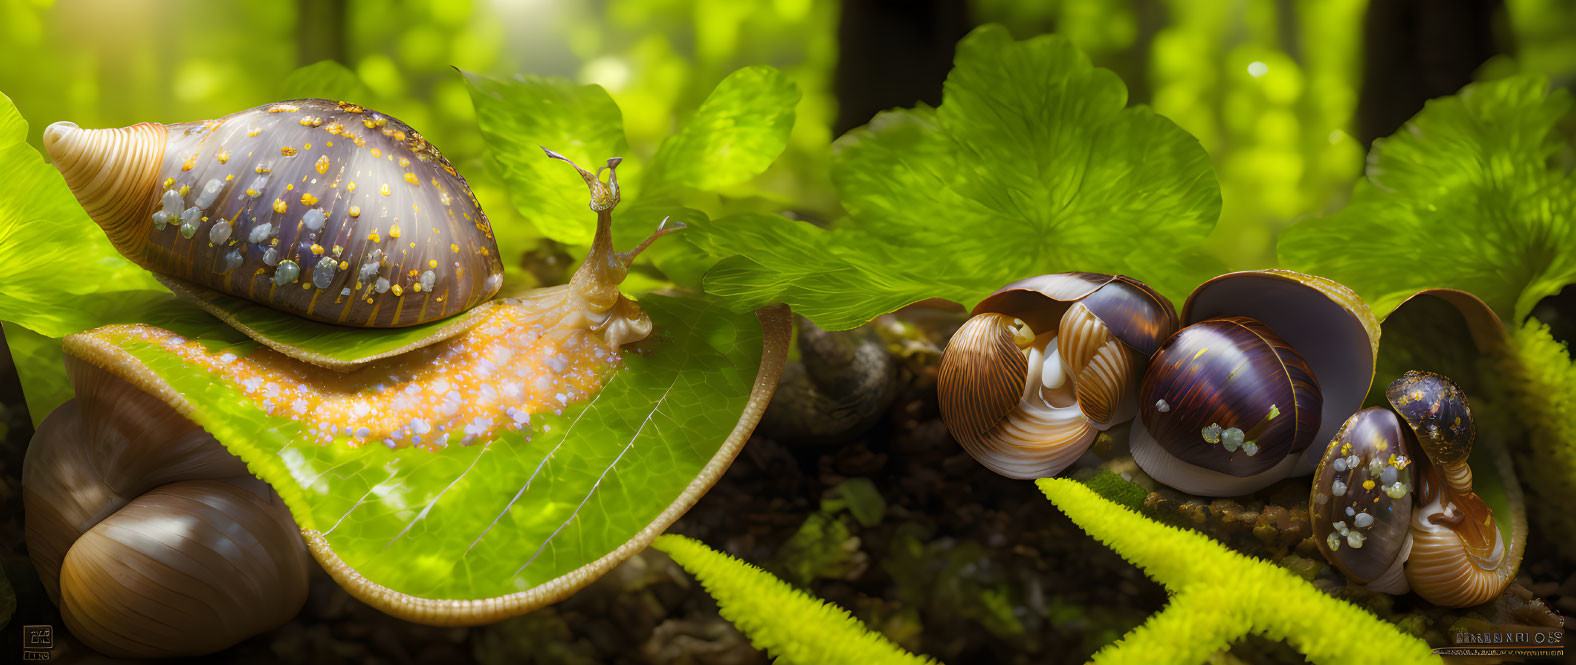 giant snails 1